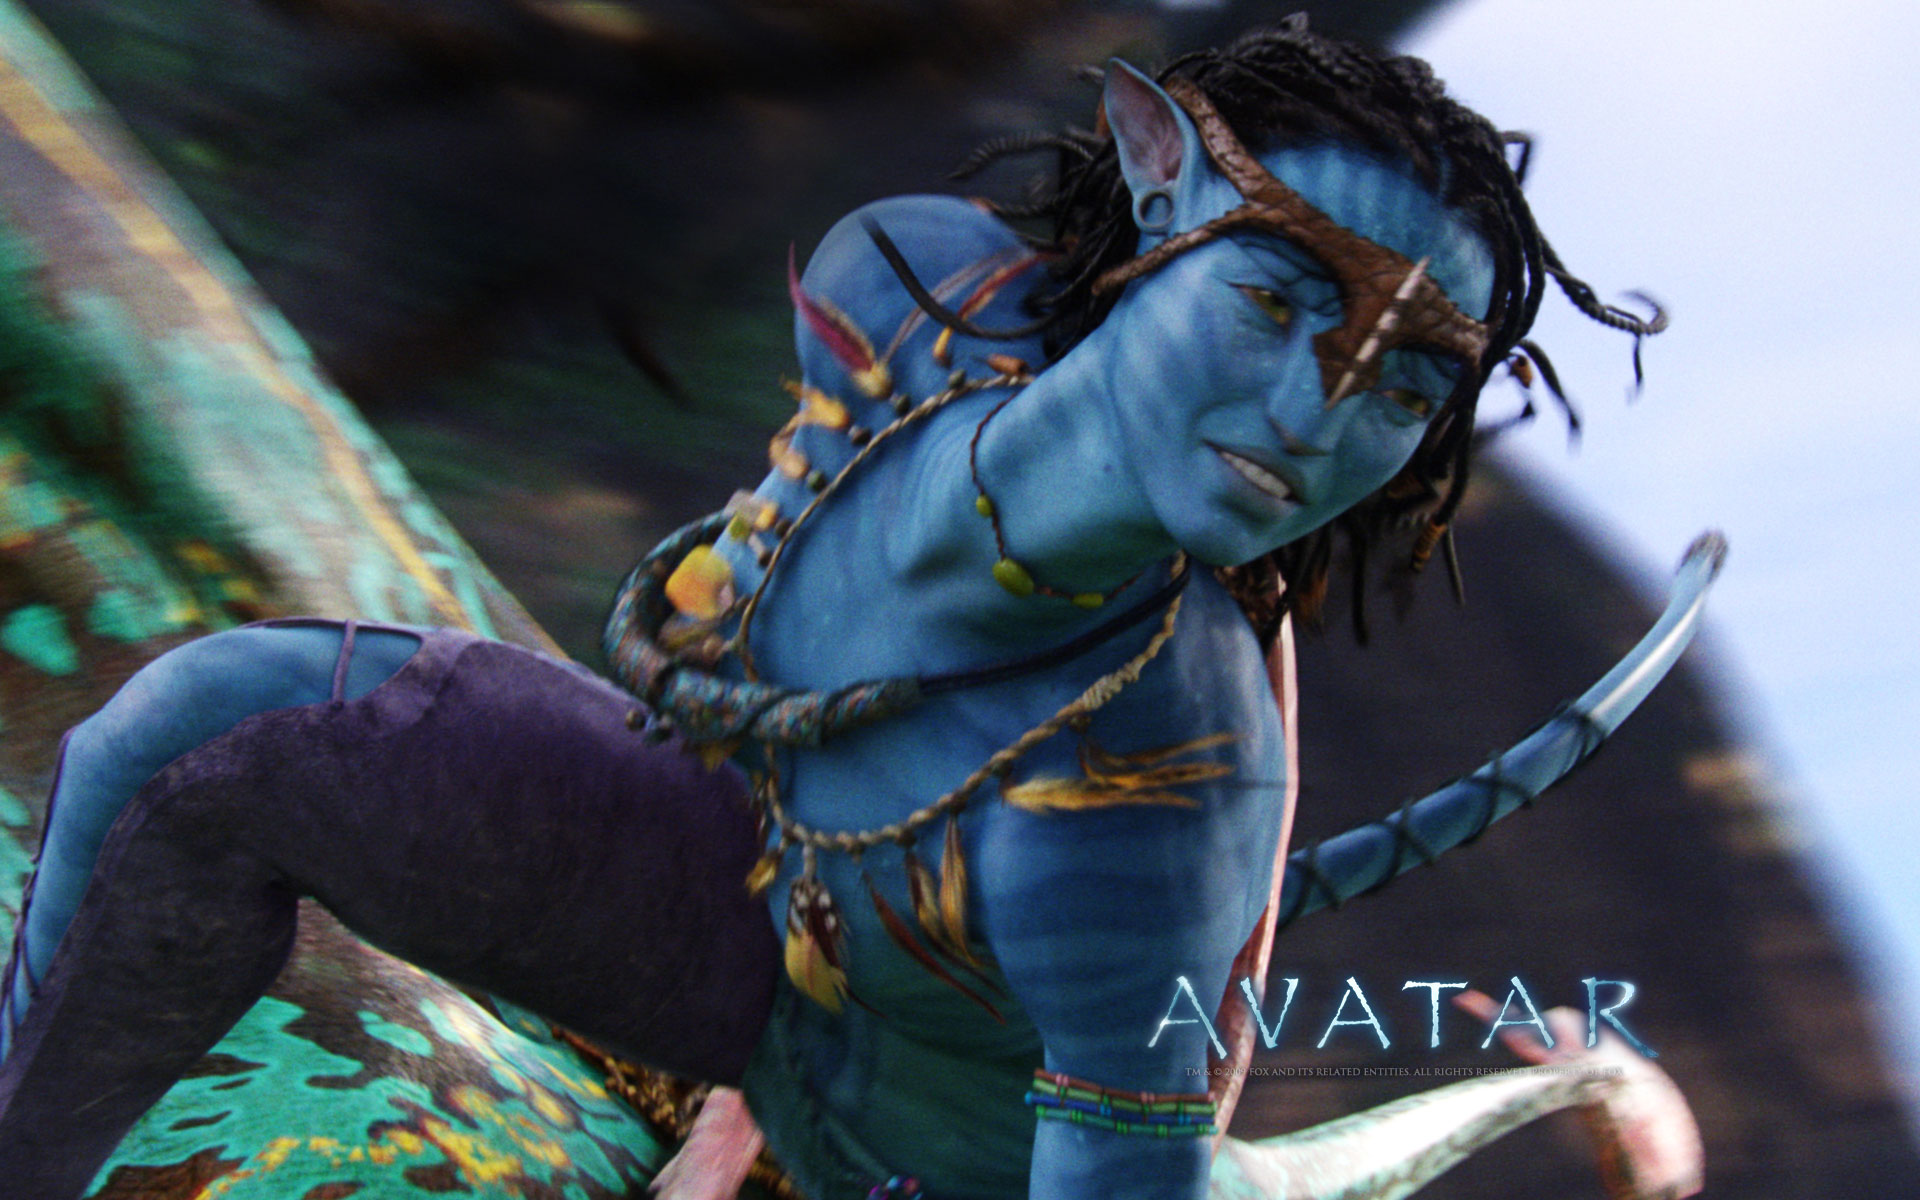 Avatar Stunning HD Movie Wallpaper Blaberize